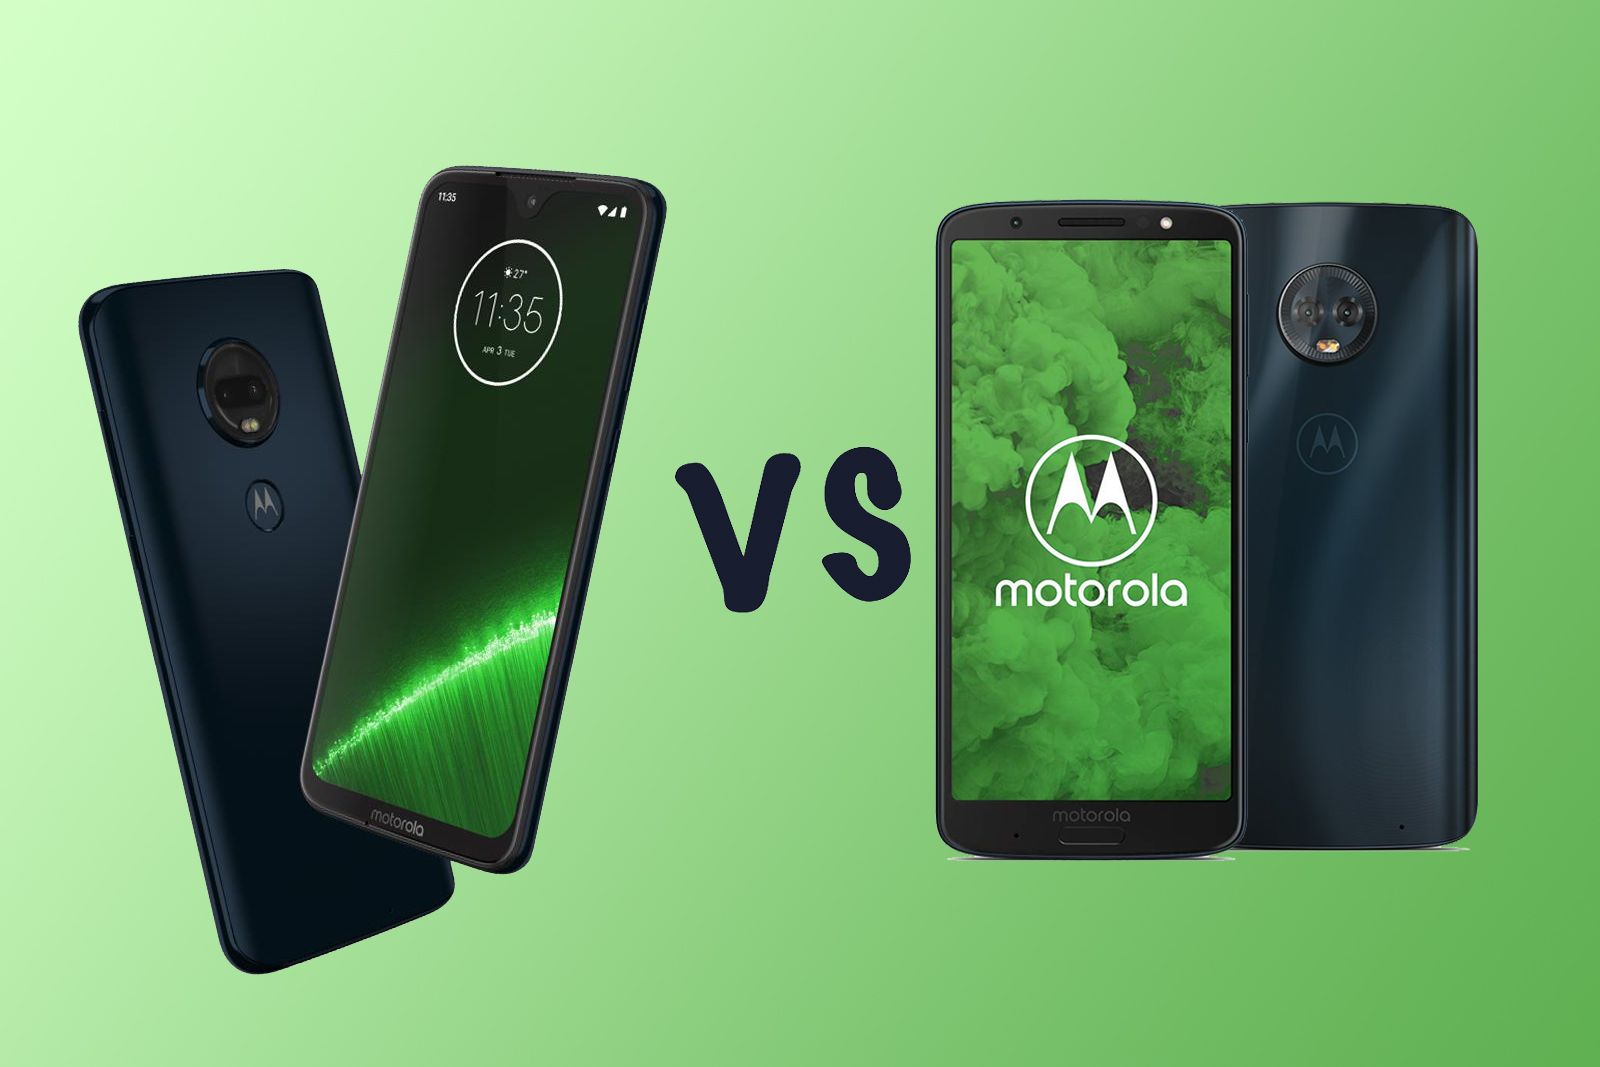 Motorola Moto G7 Plus Vs Moto G6 Plus Should You Upgrade image 1